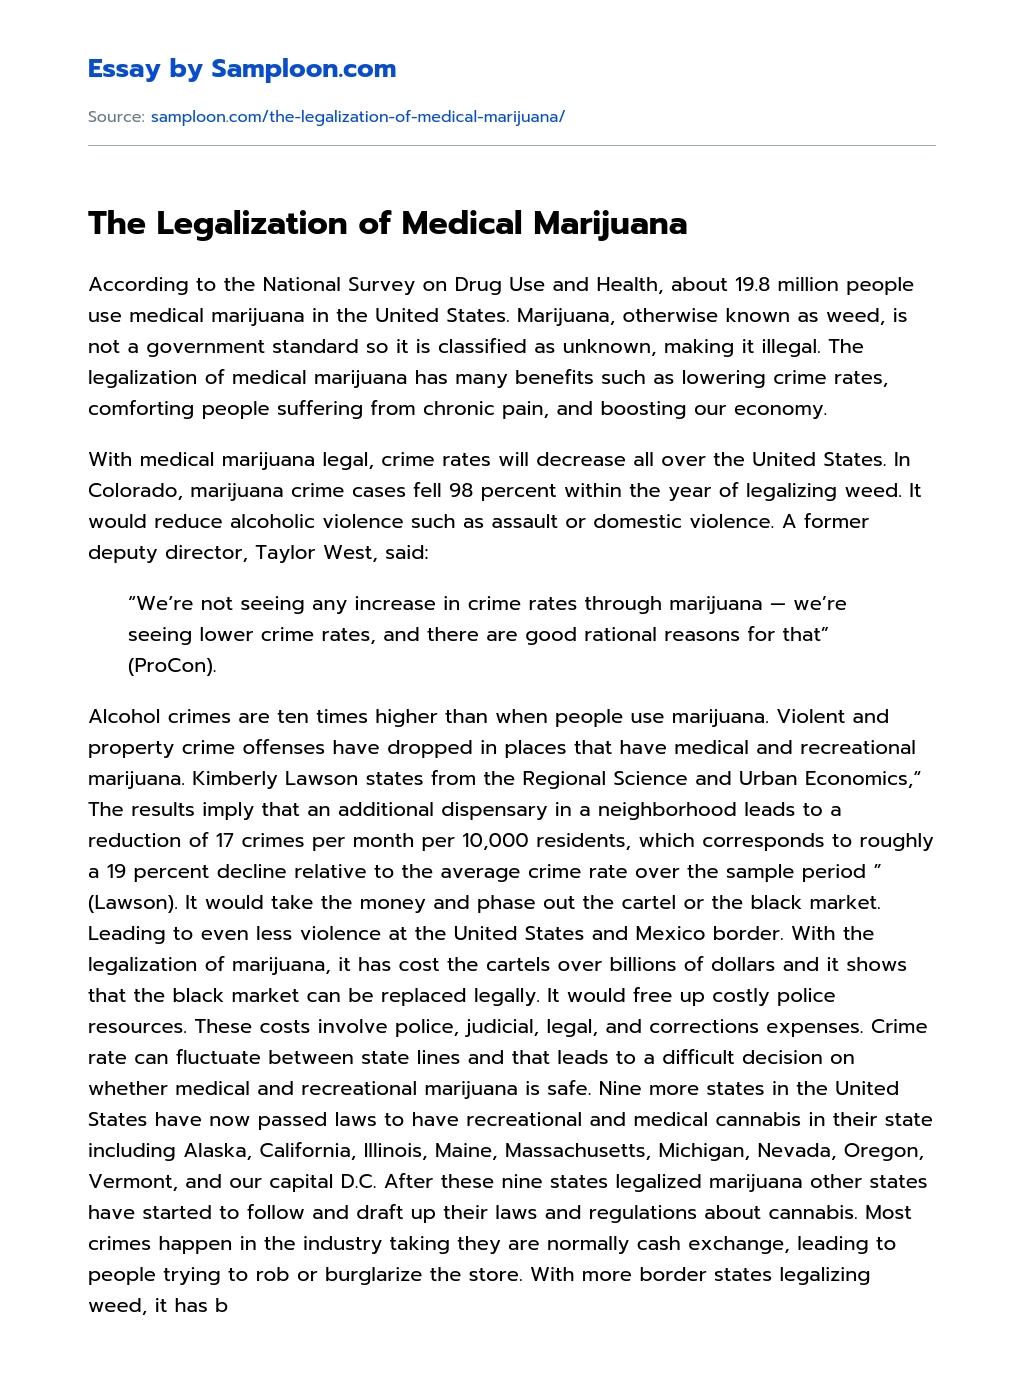 The Legalization of Medical Marijuana essay